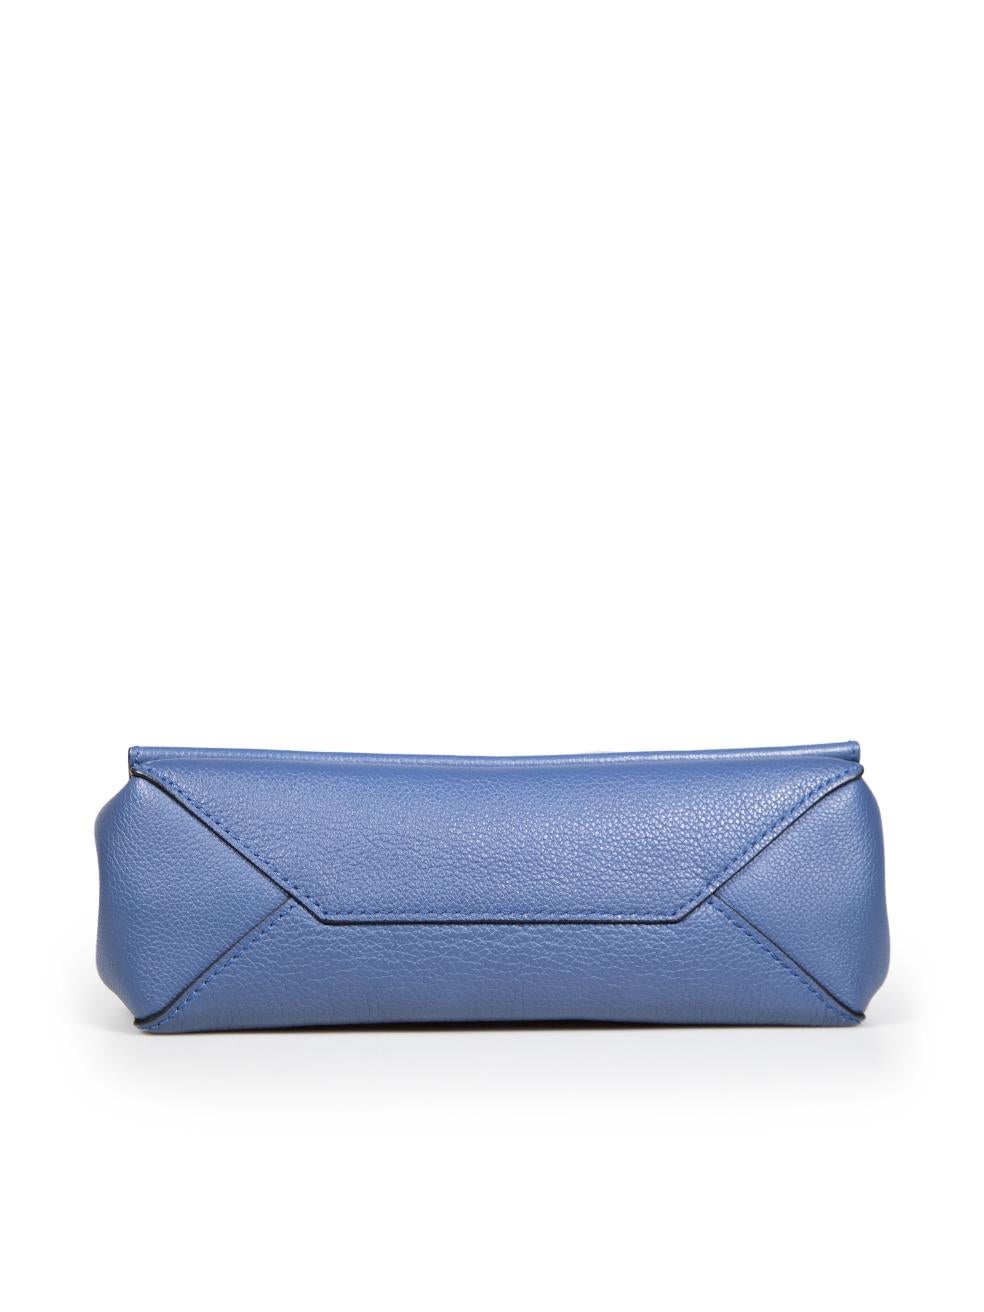 Women's Louis Vuitton 2016 Blue Leather Lockme II BB Bag For Sale